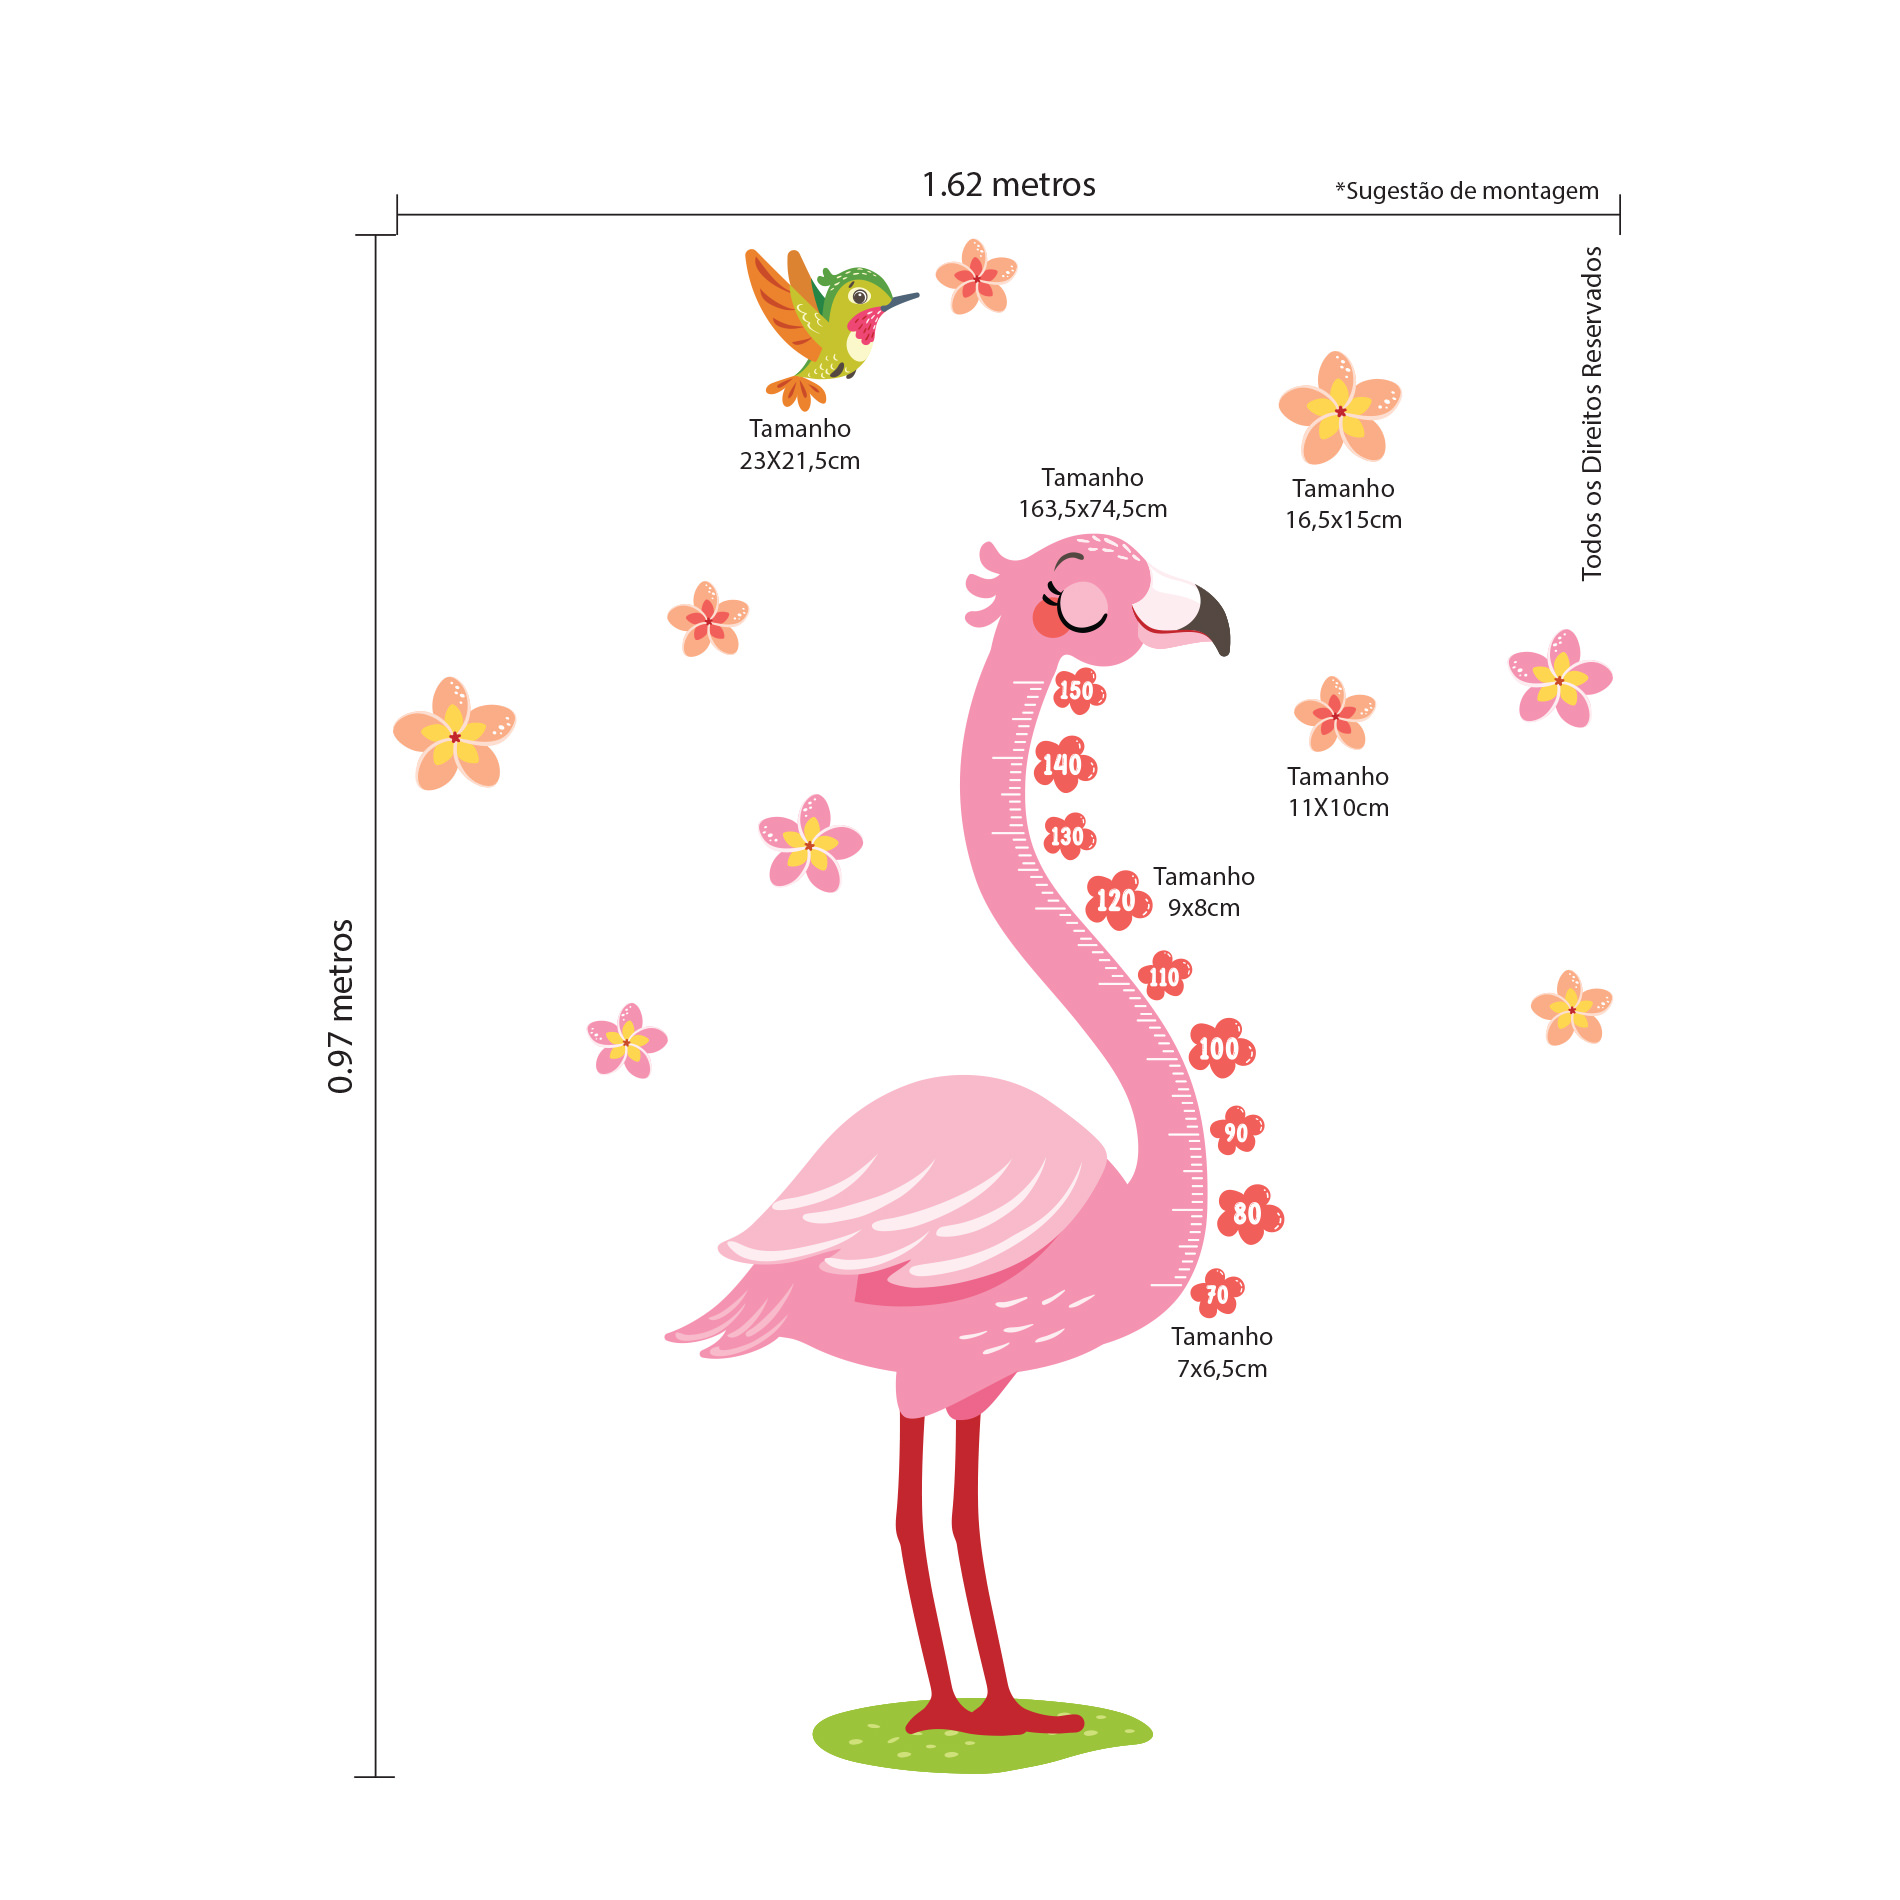 Adesivo de Parede Flamingo Régua de Crescimento 187x78cm,Adesivo de Parede Flamingo Régua de Crescimento 187x78cm,Adesivo de Parede Flamingo Régua de Crescimento 187x78cm